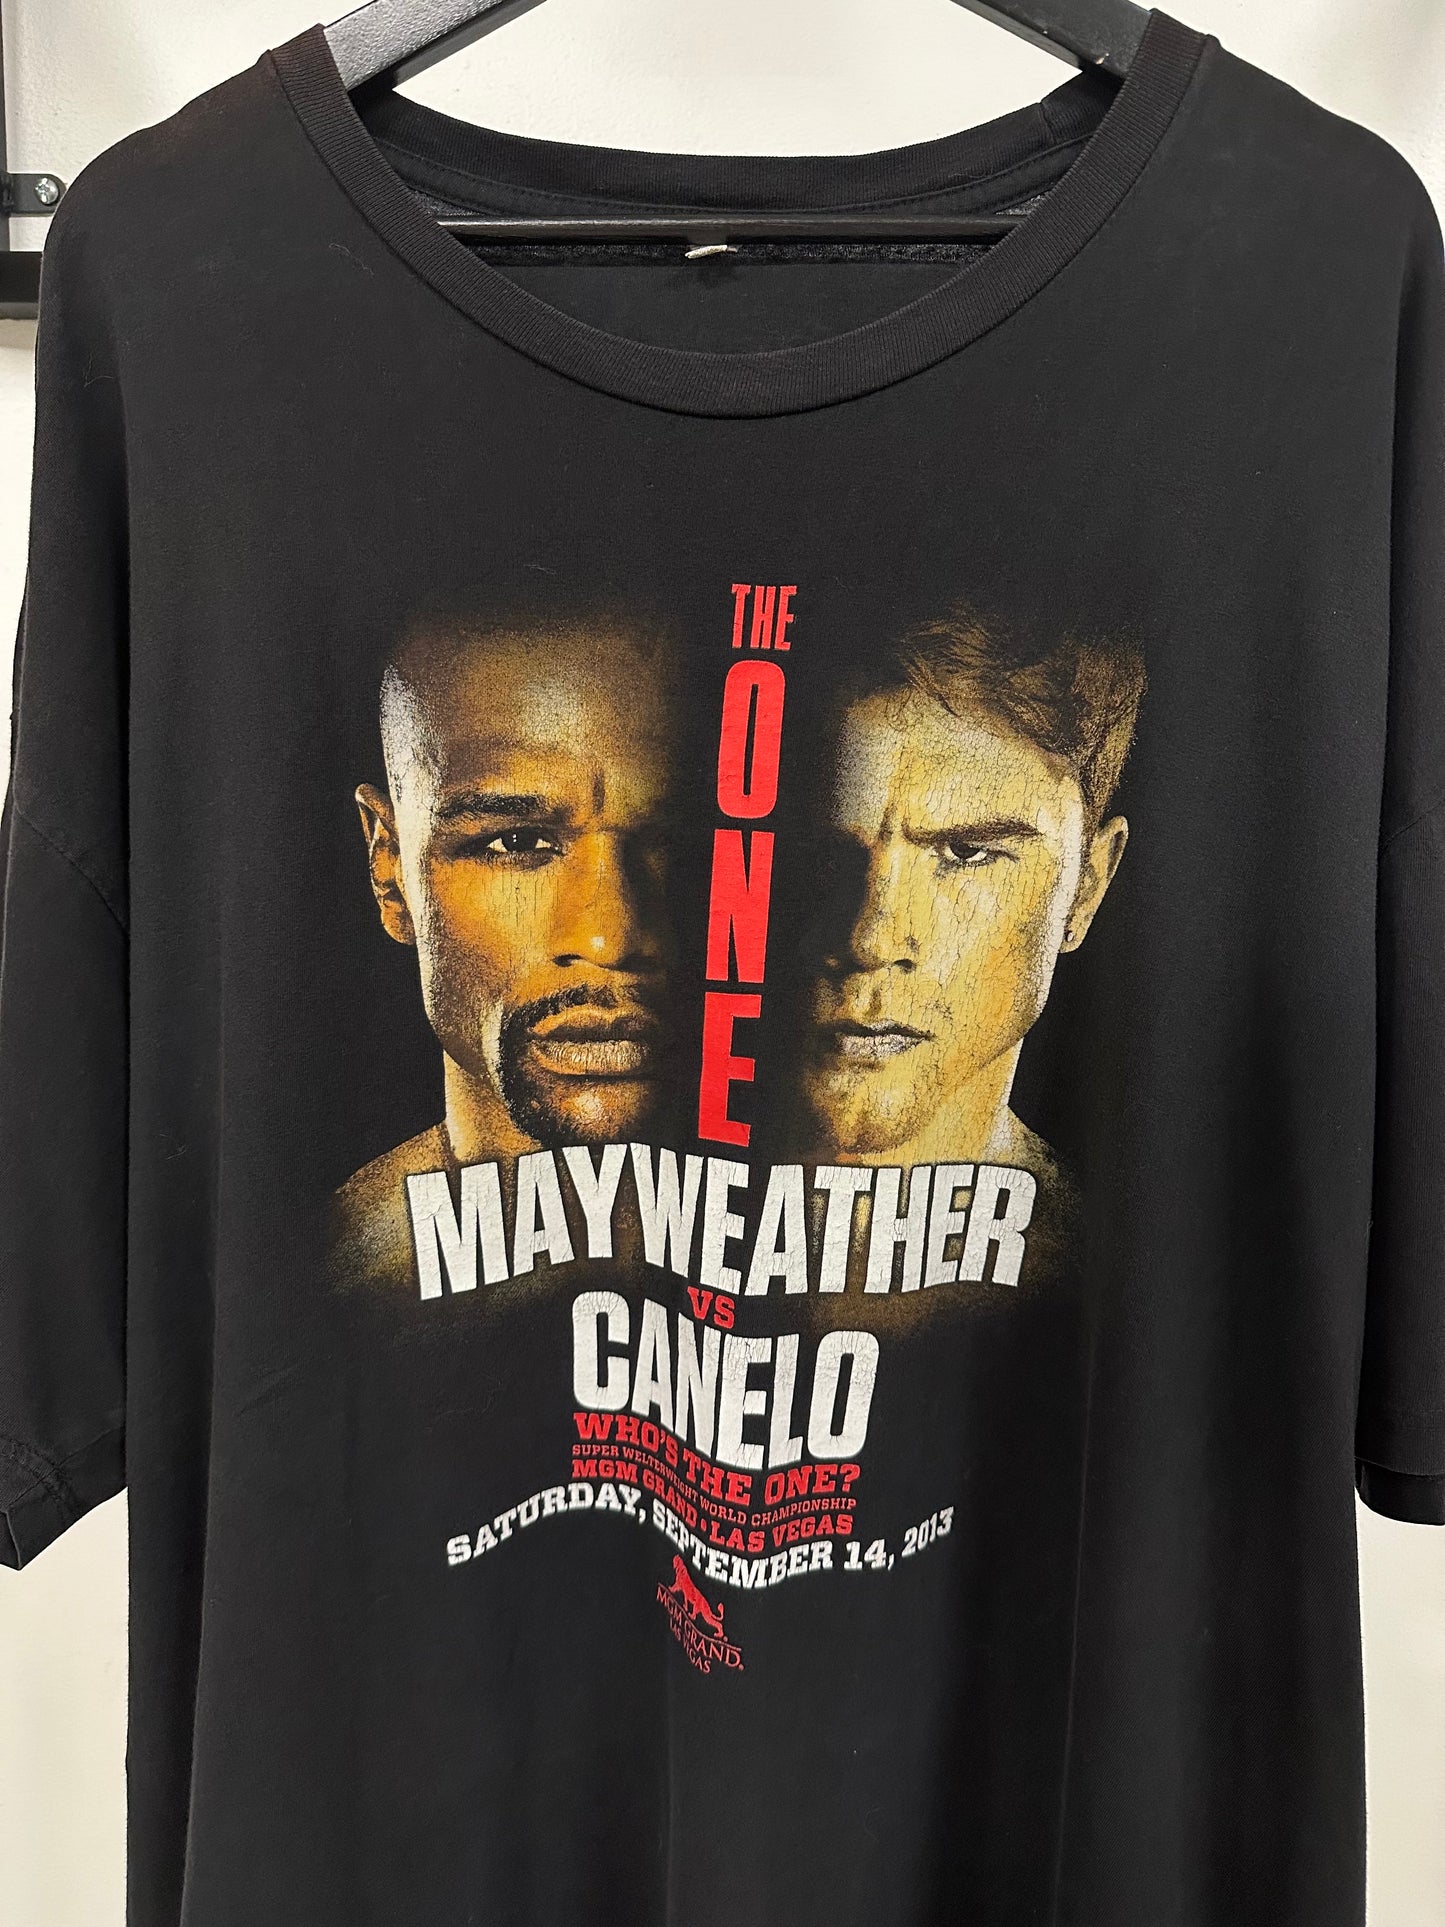 Mayweather vs Canelo Shirt XXXL